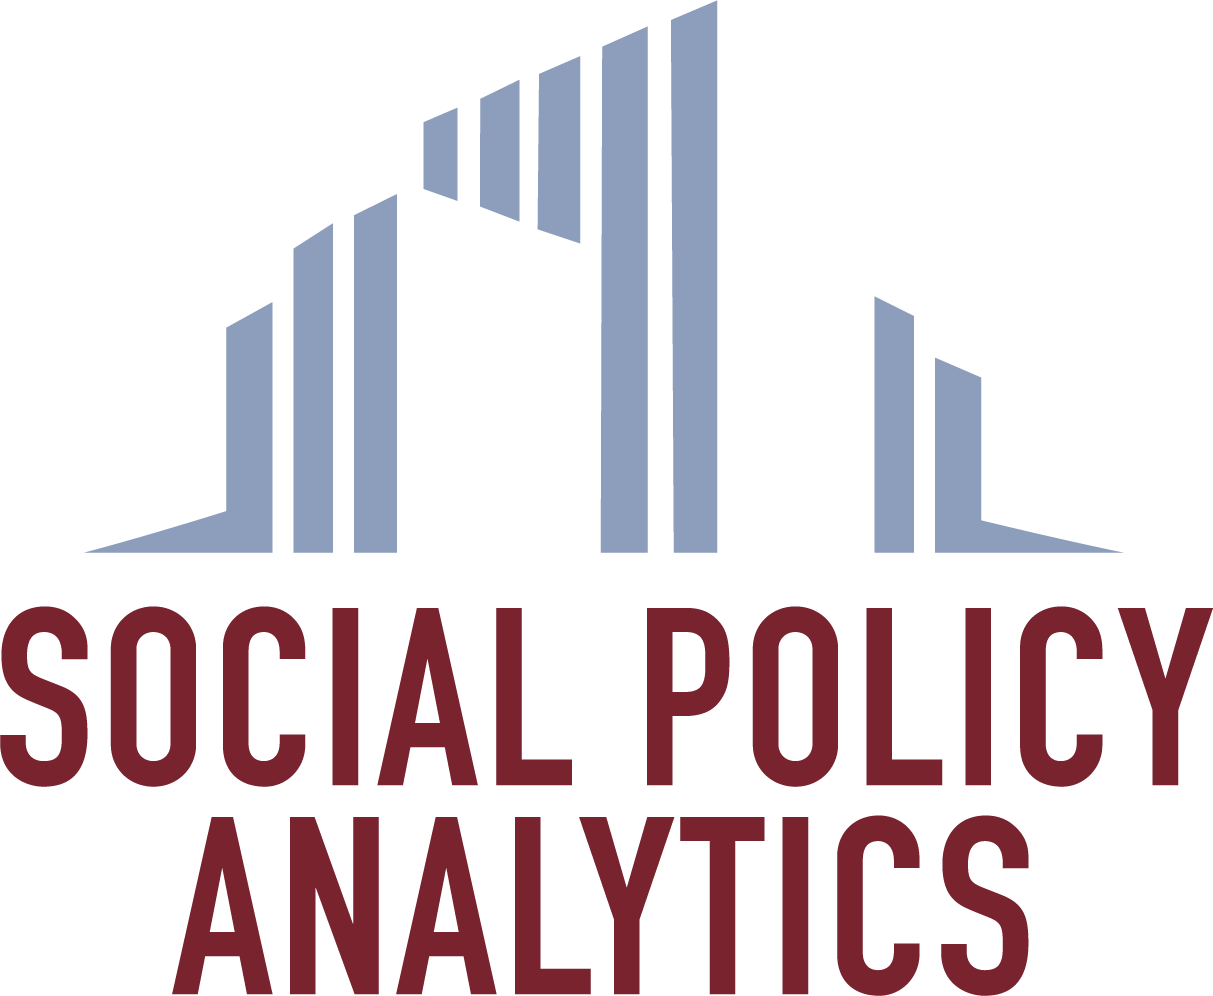 Social Policy Analytics